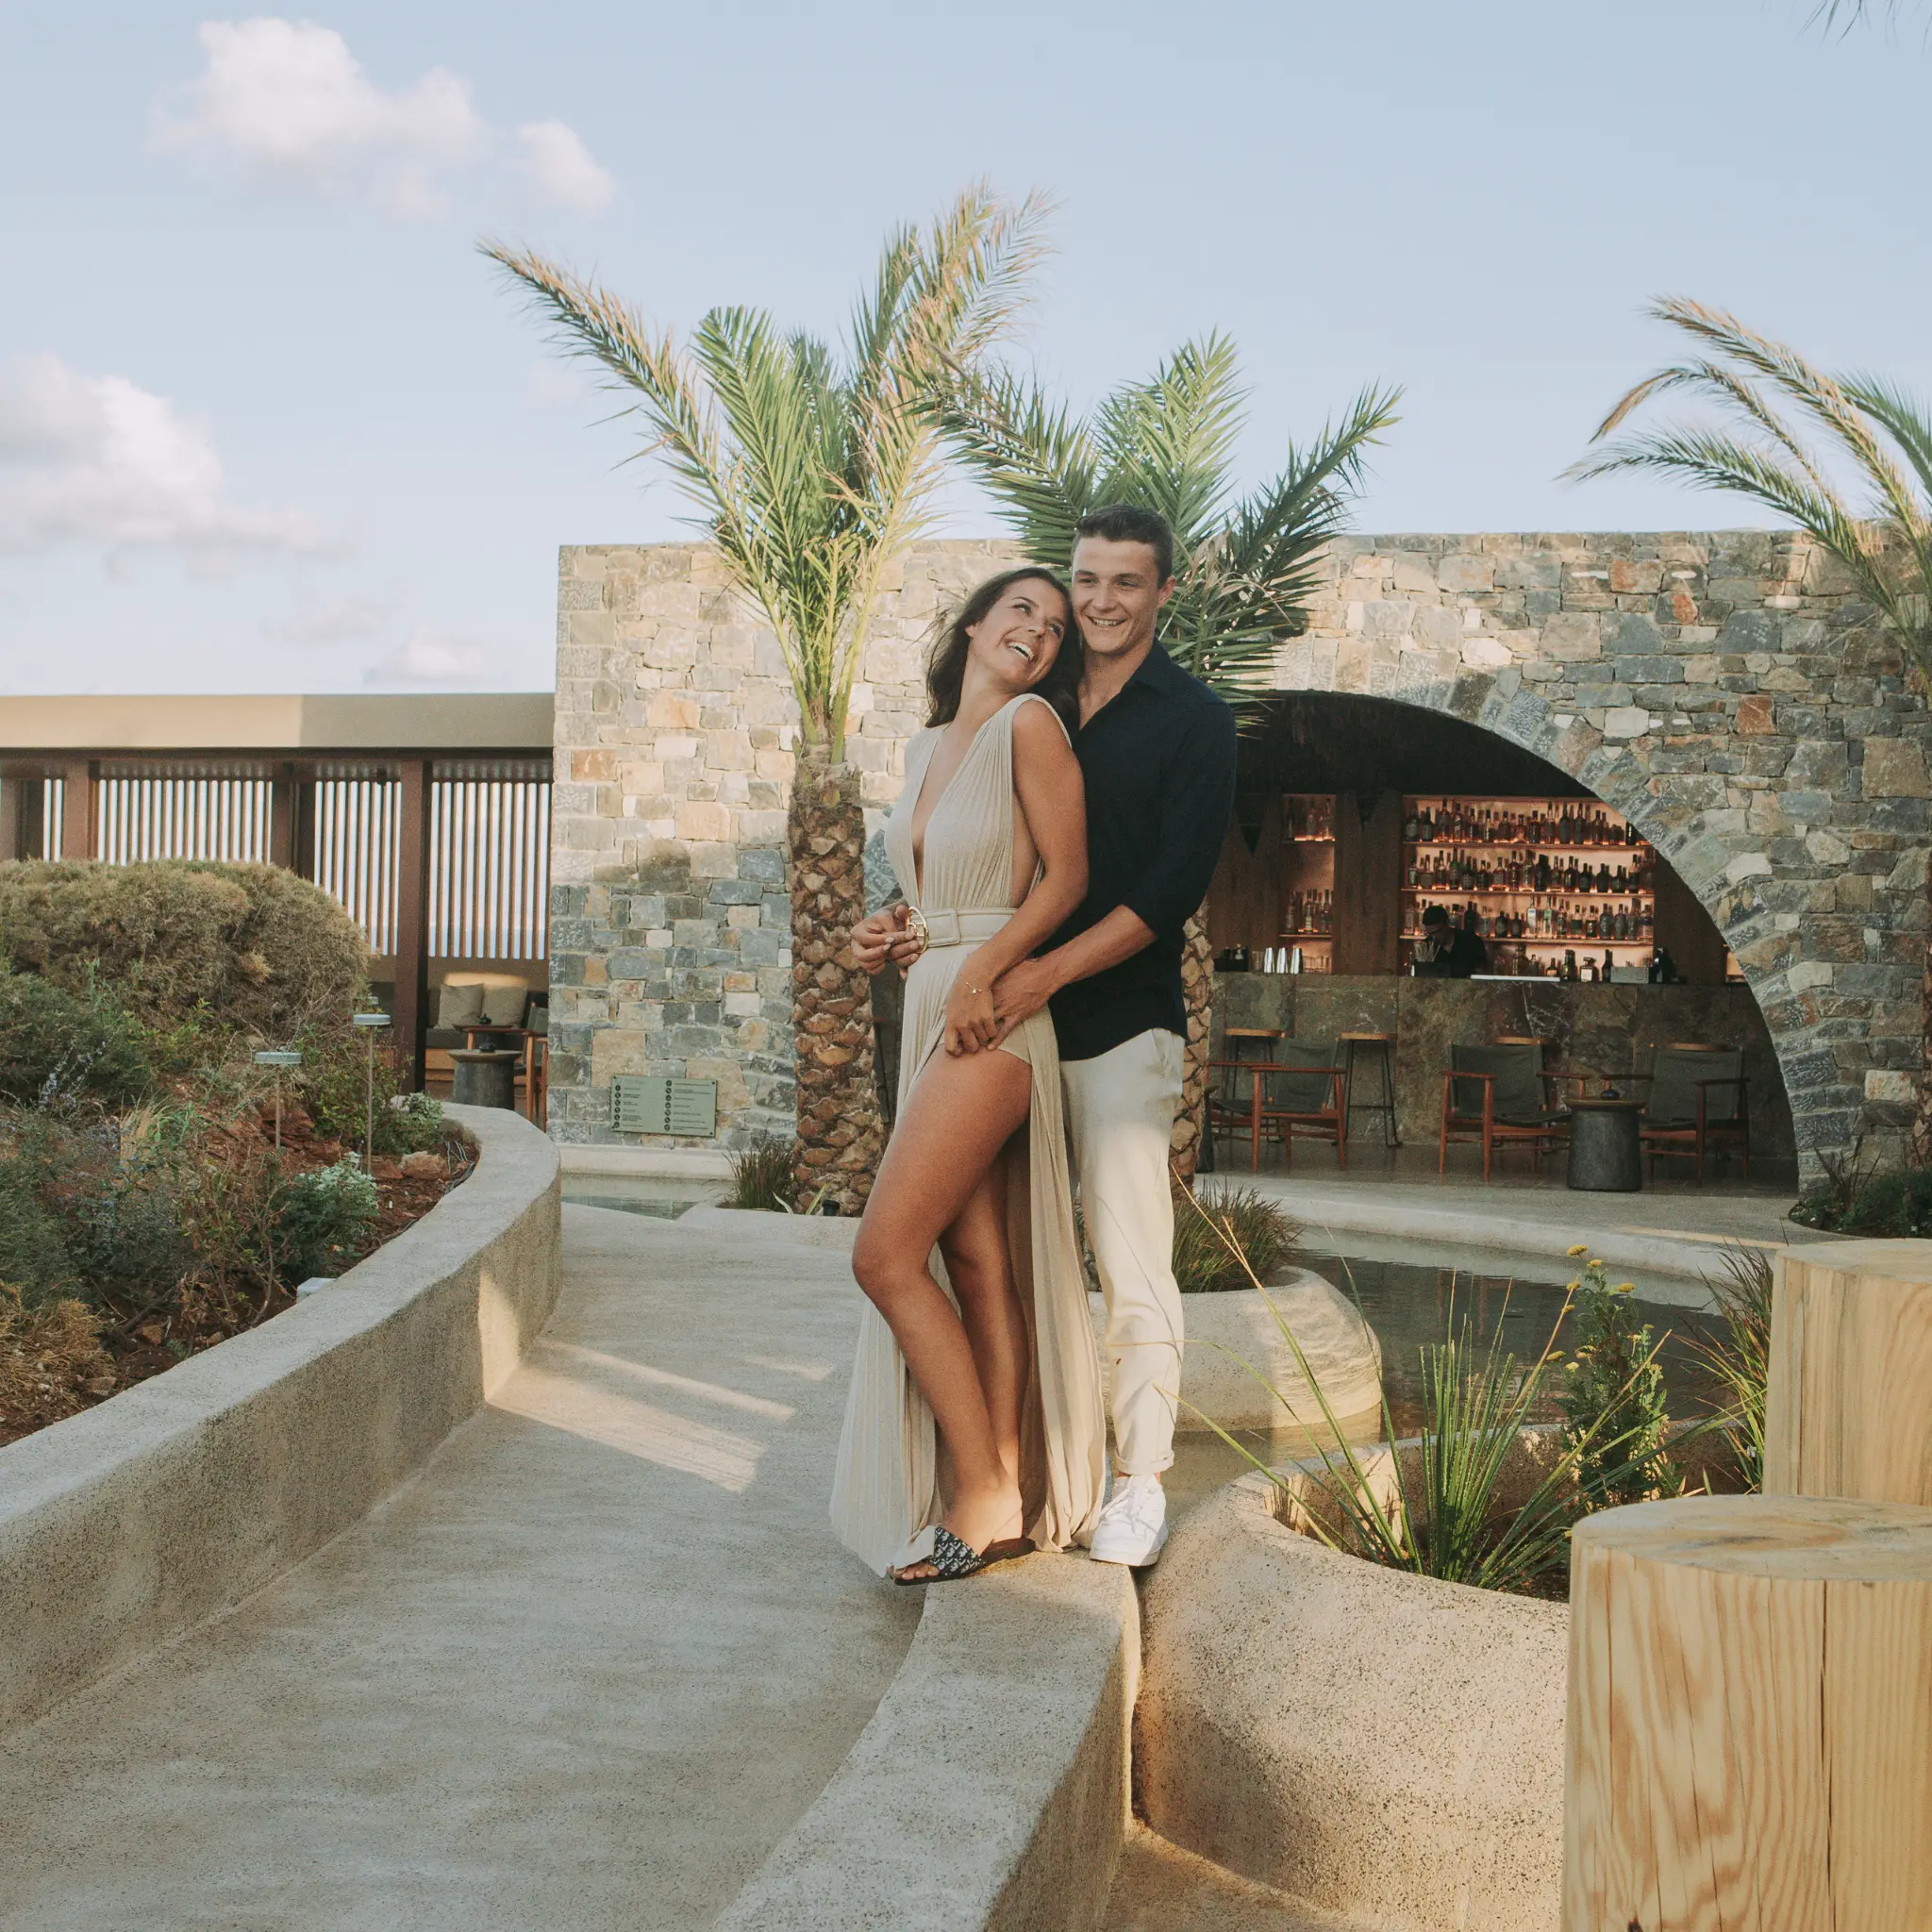 Couple's photoshoot by Sami, Localgrapher in Crete